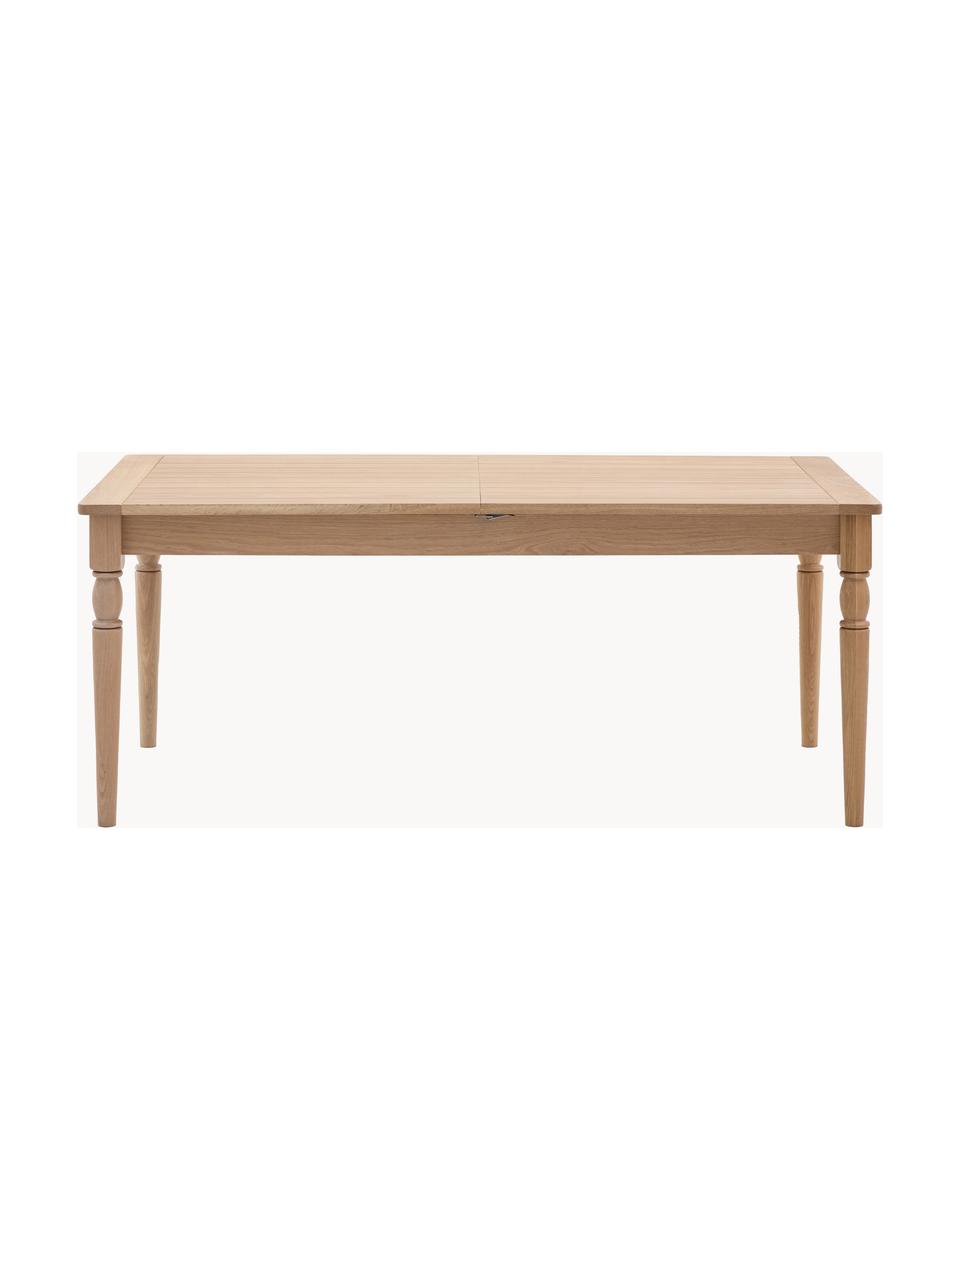 Table extensible artisanale en bois Eton, 180 - 230 x 95 cm, Bois, larg. 180 - 230 x prof. 95 cm